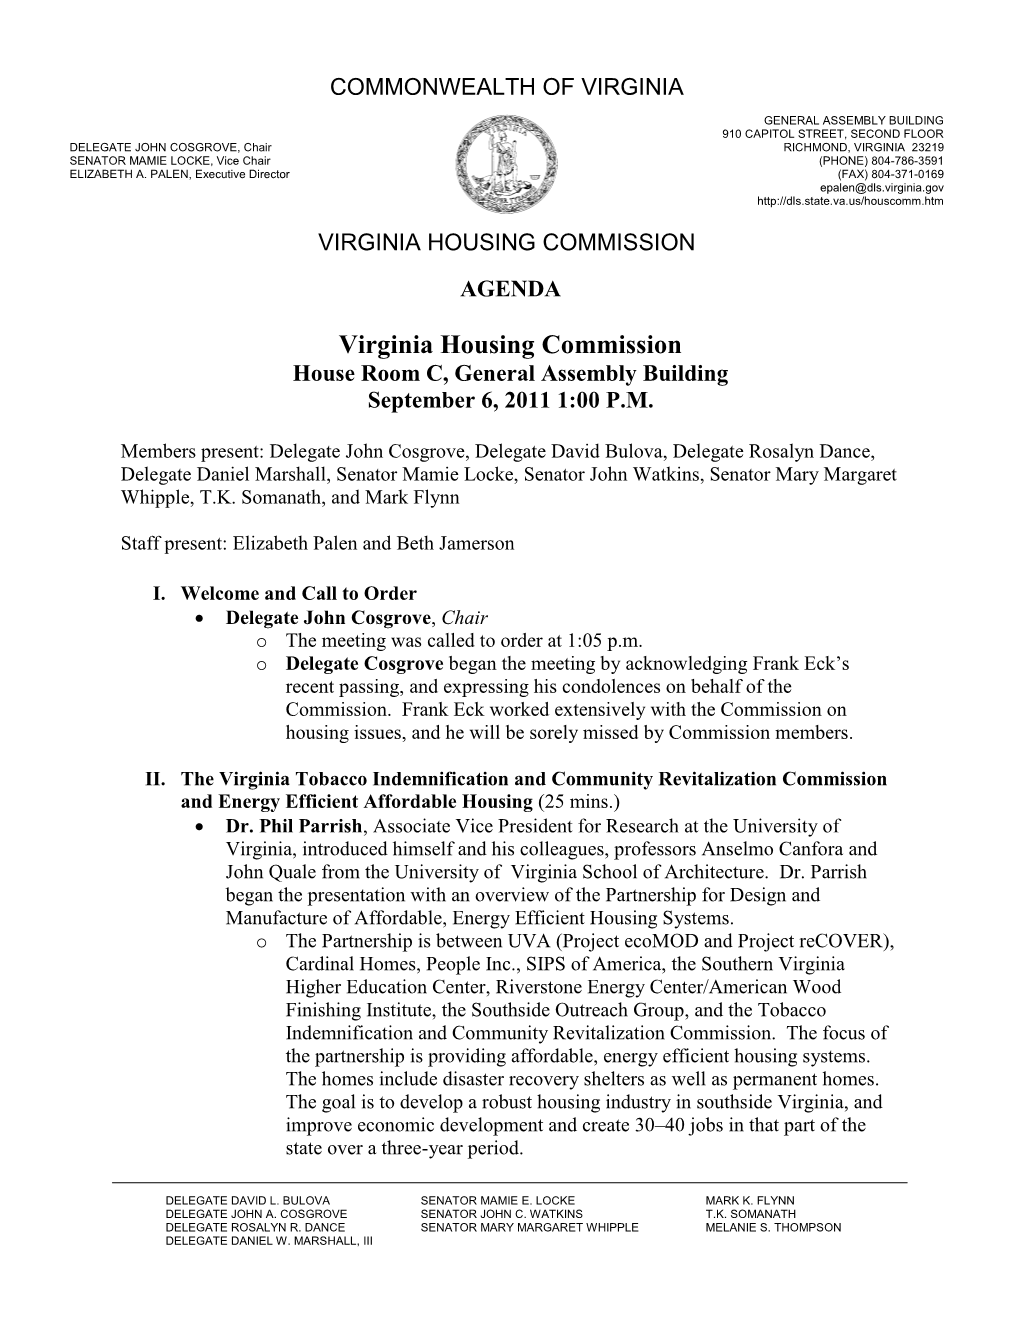 Virginia Housing Commission